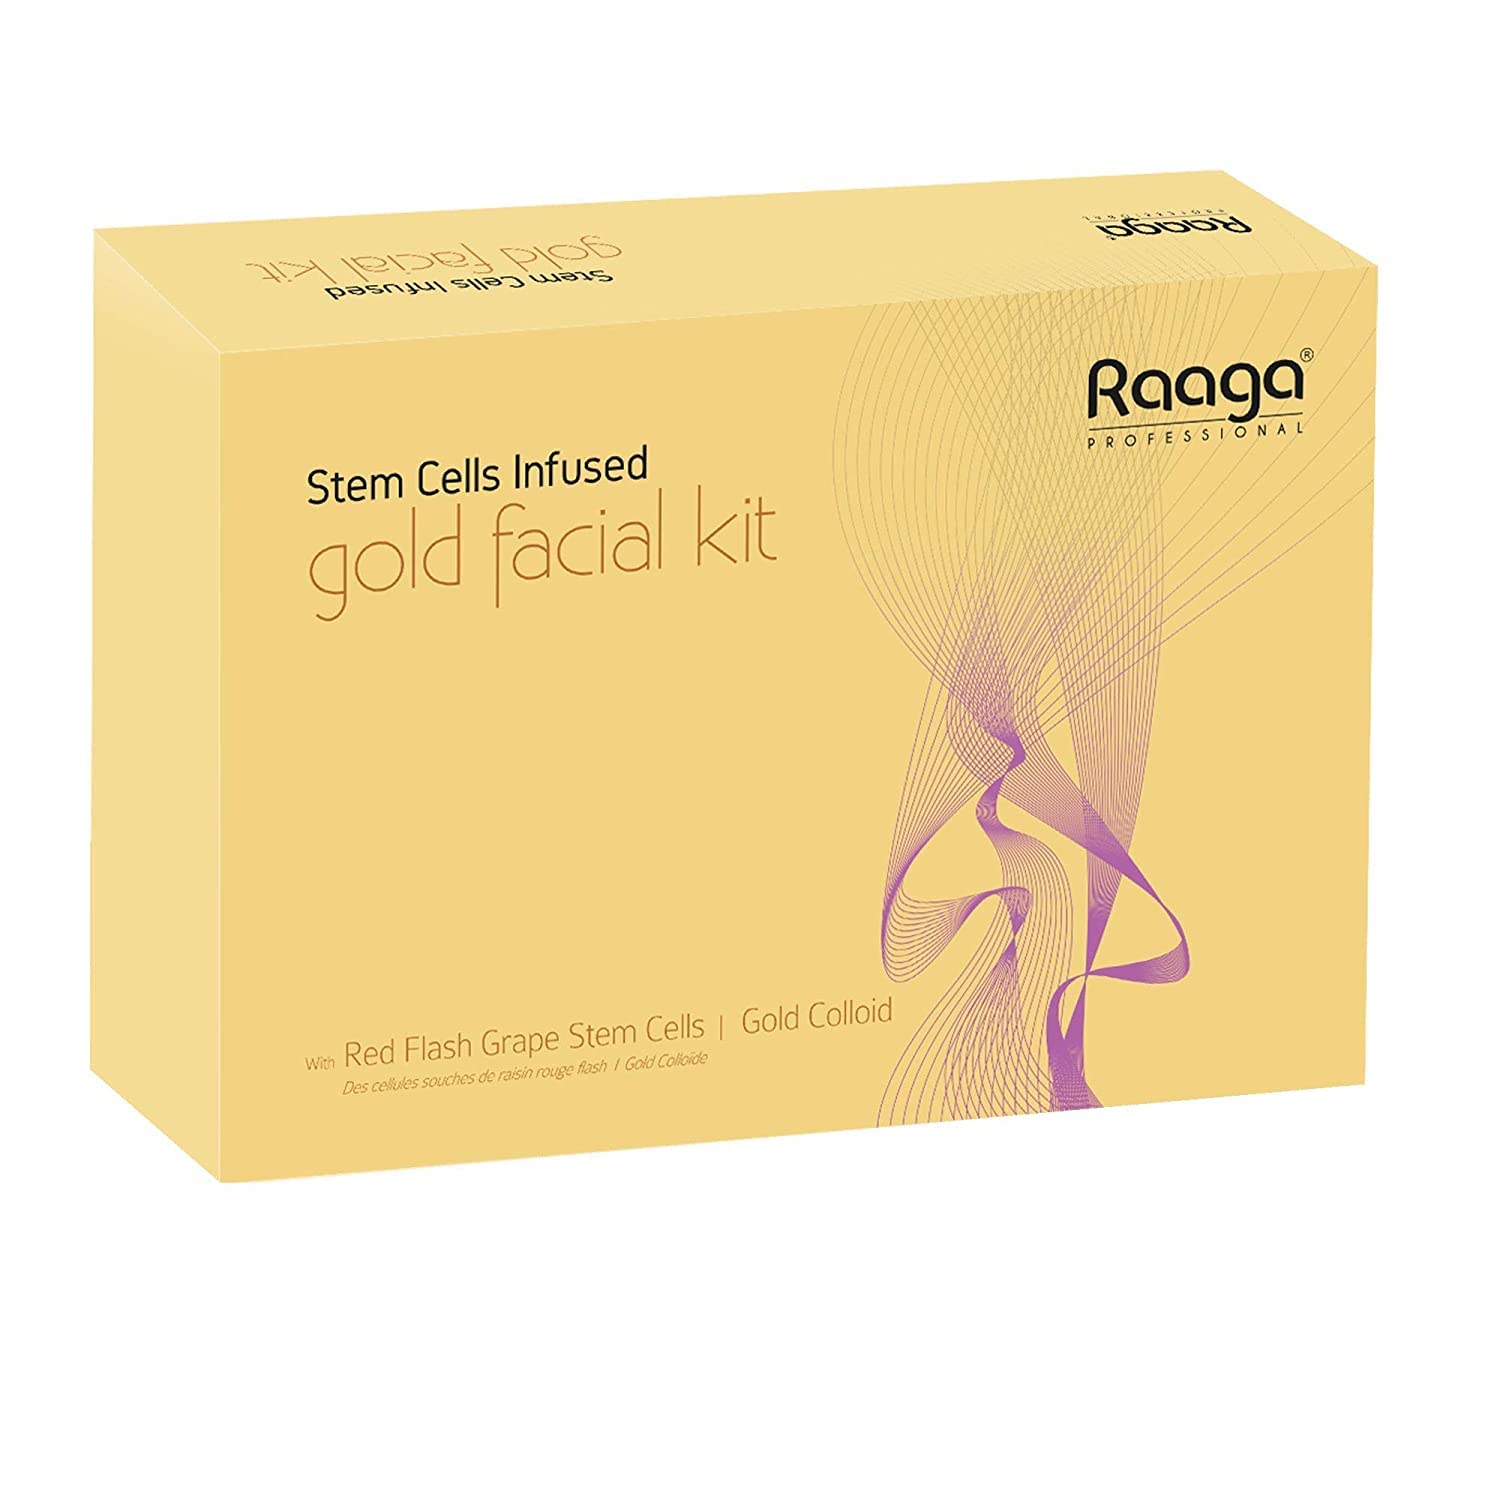 Buy Raaga Professional Stem Cells Infused Gold Facial Kit